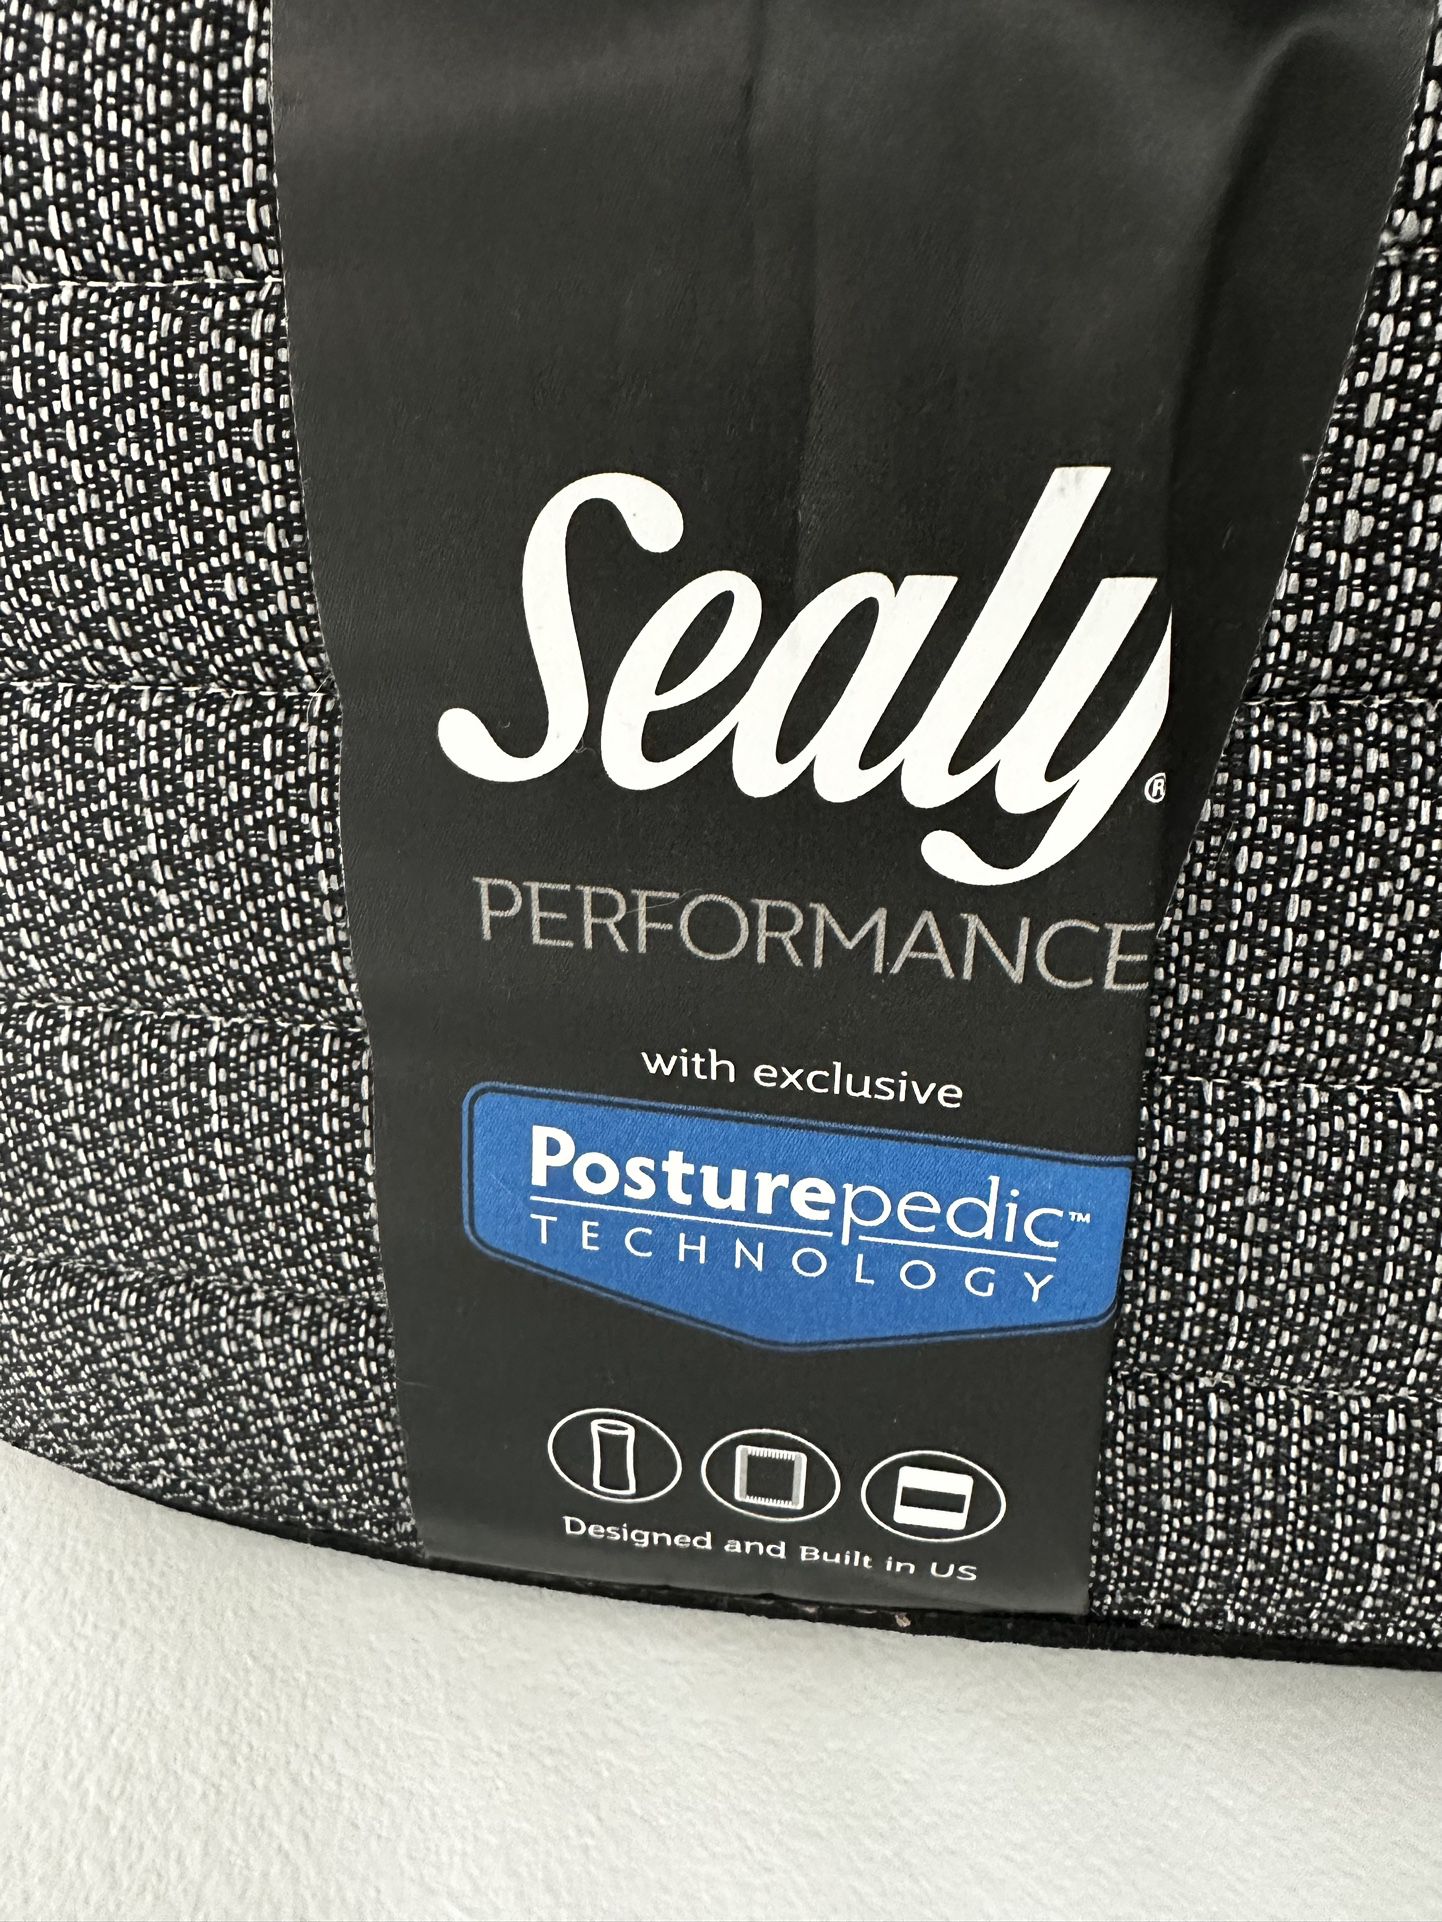 Queen Size Sealy Performance Posturepedic 